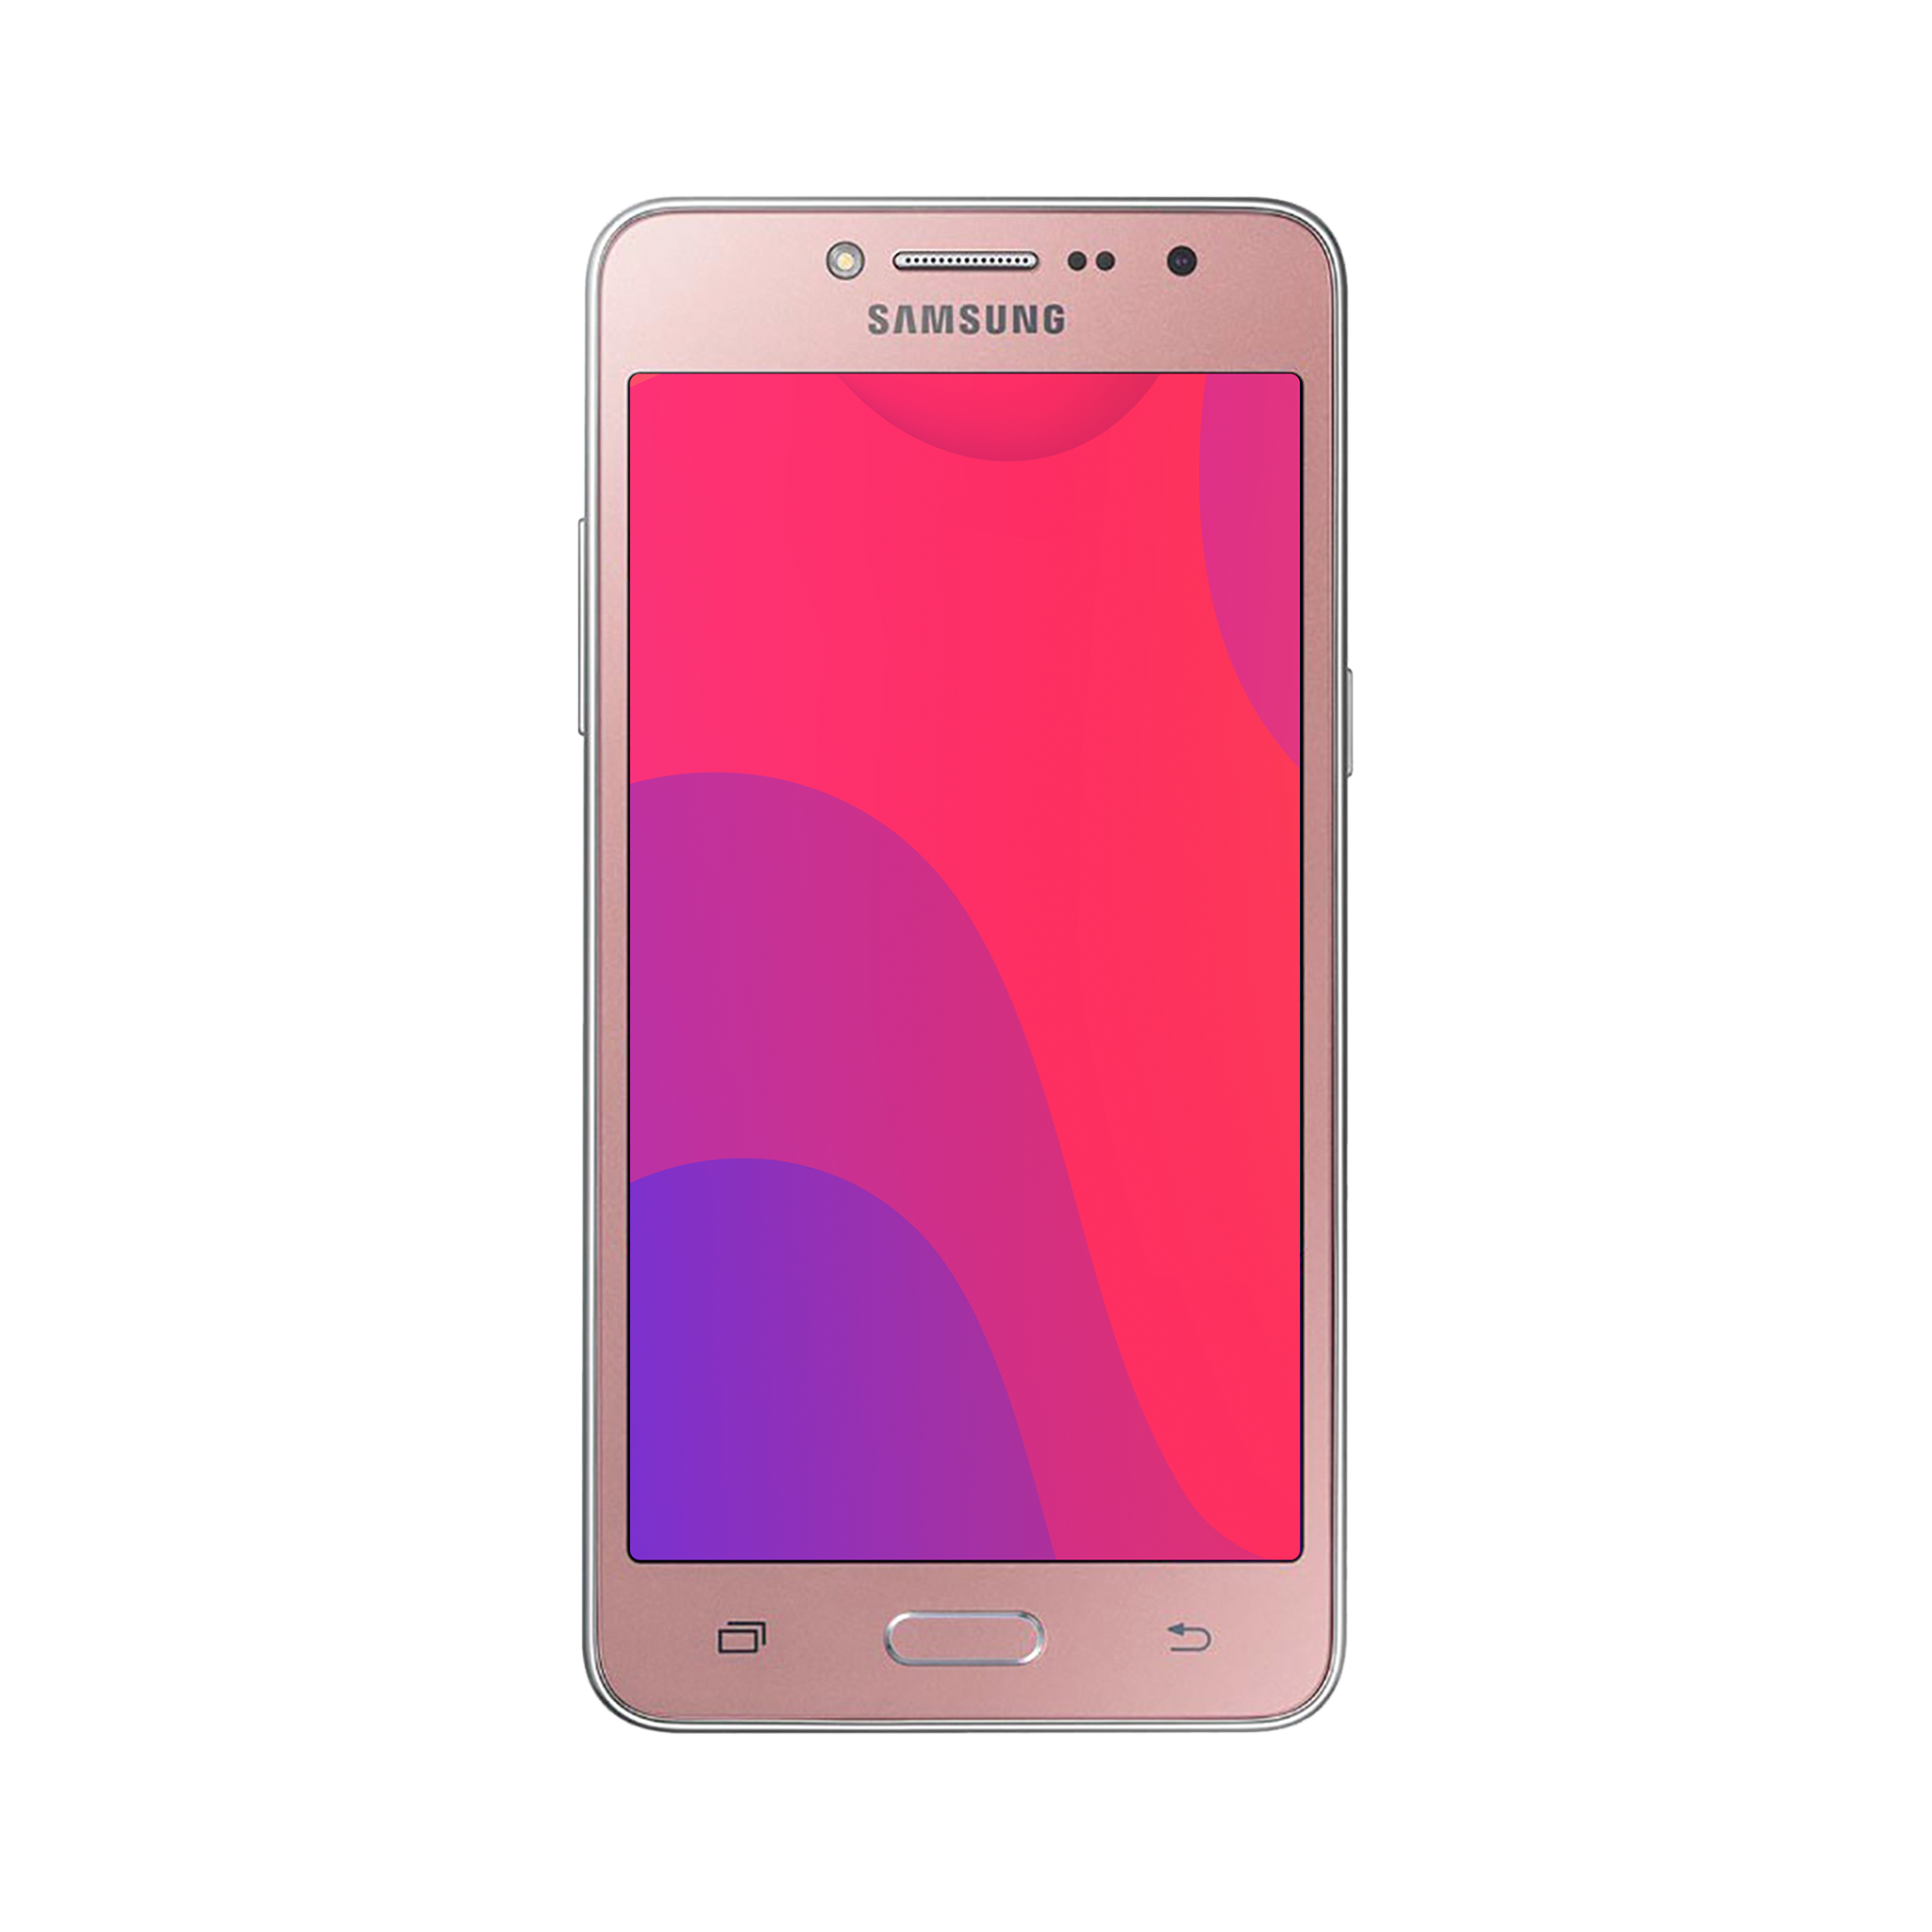 Samsung Galaxy Grand Prime Plus 8GB Rose Gold